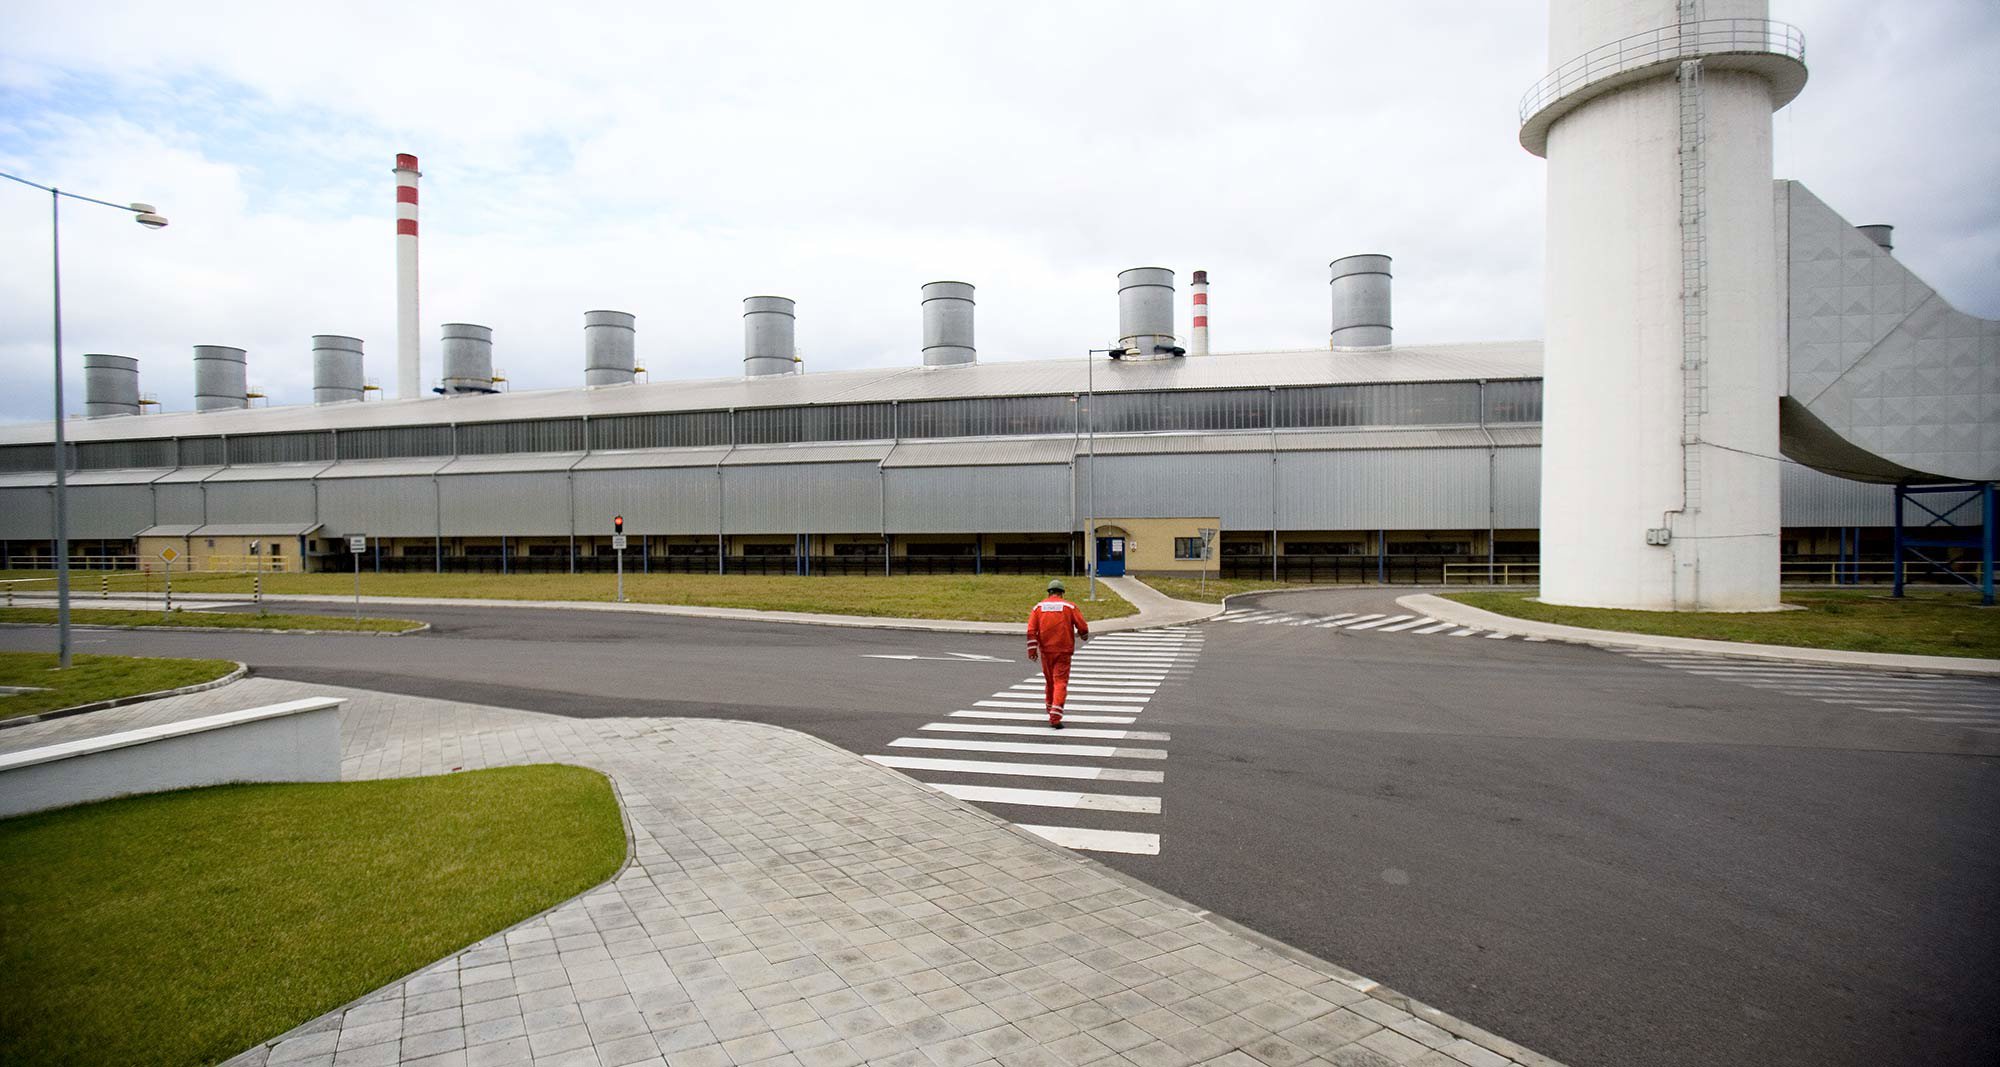 Hydro's joint venture primary aluminium plant Slovalco